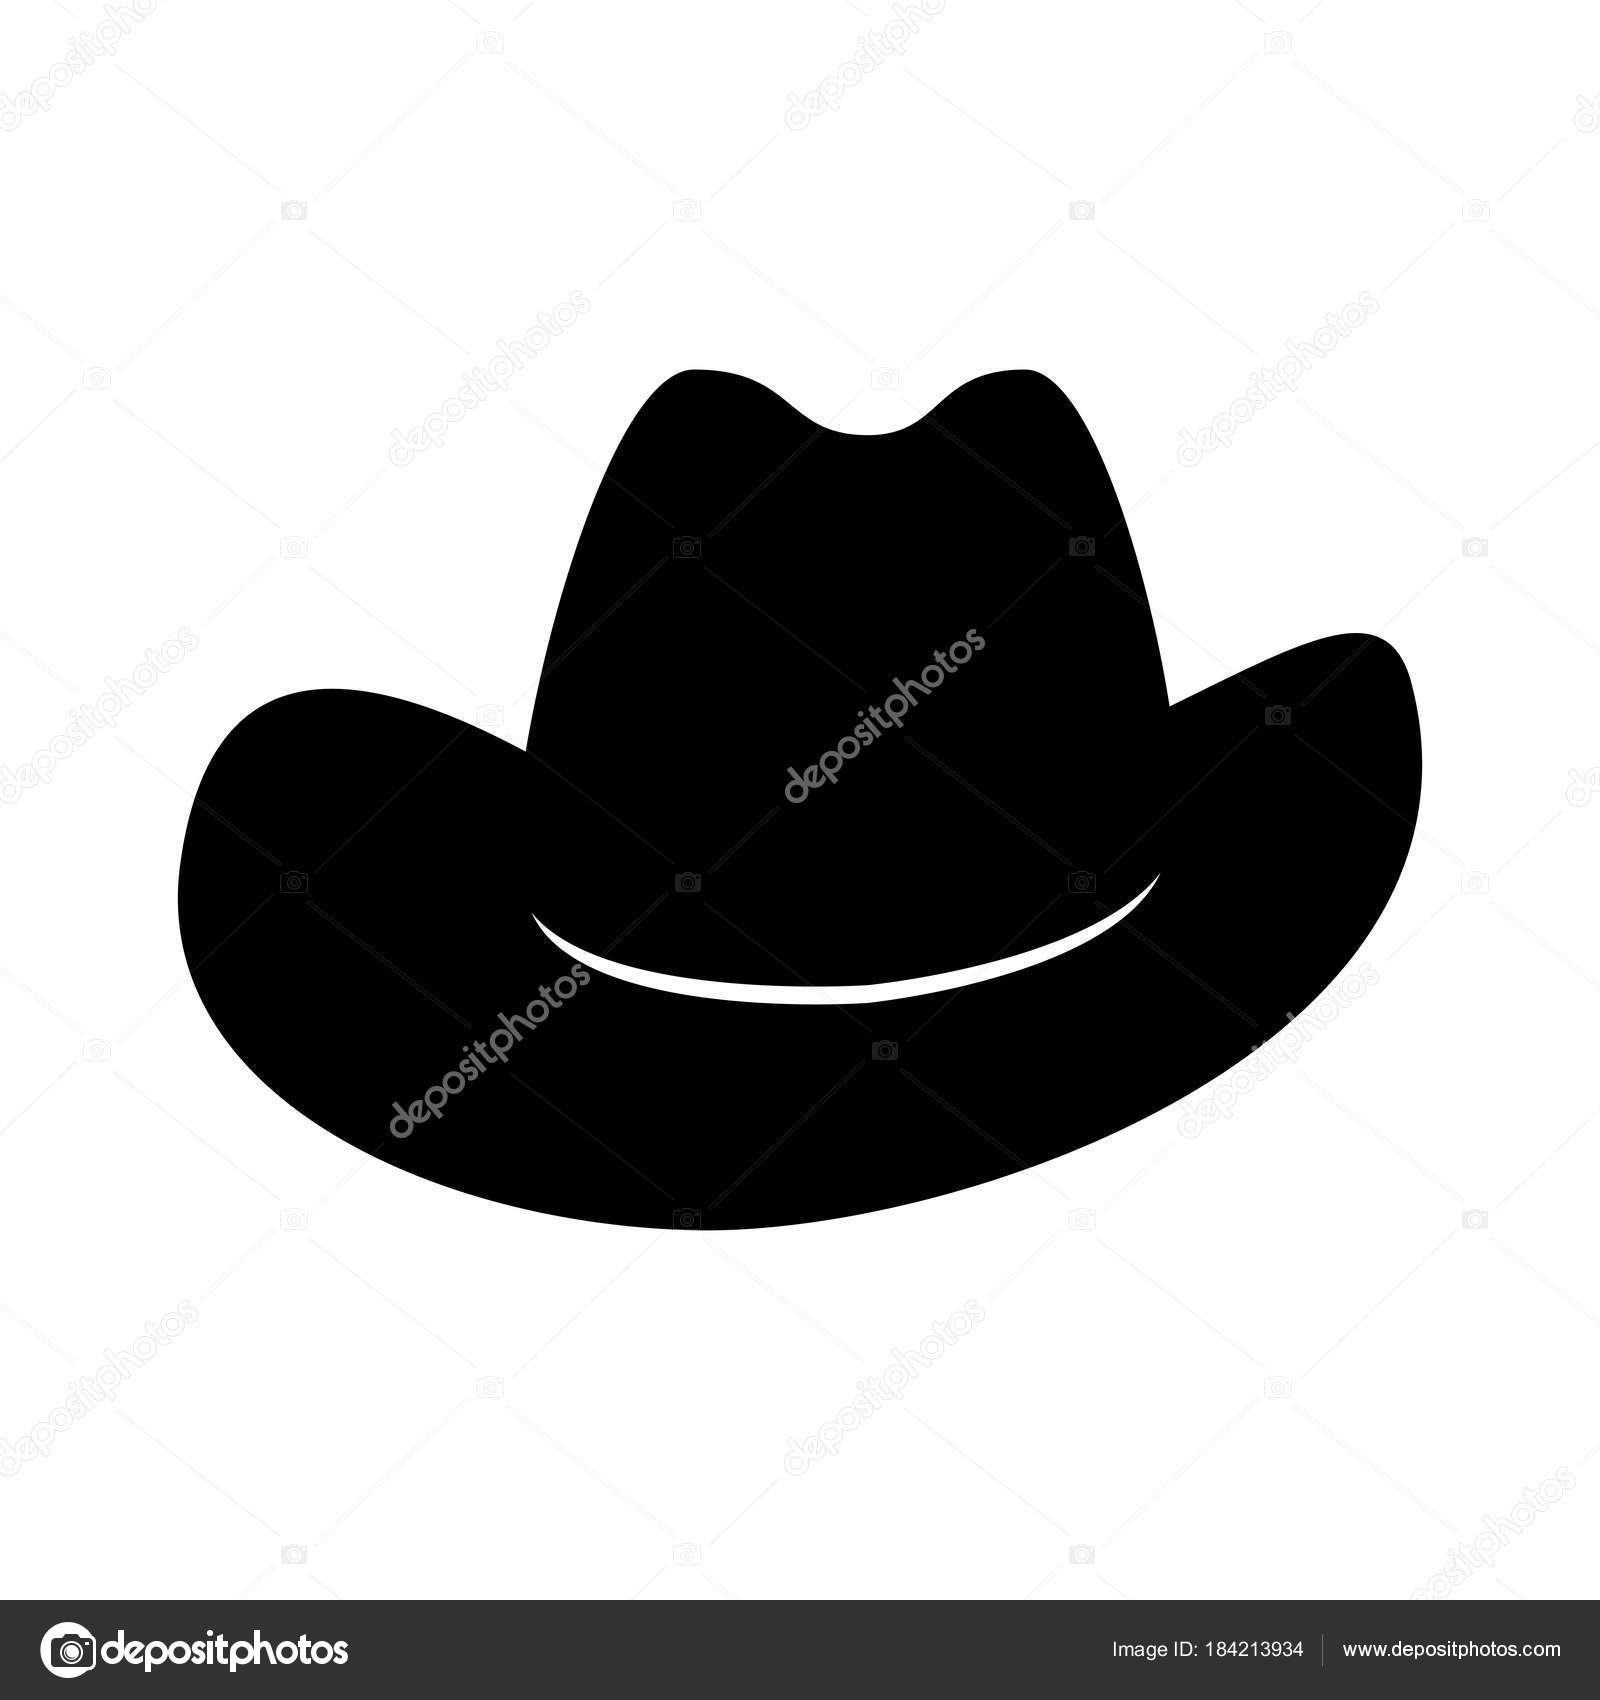 Cowboy hat icon, simple style. Cowboy hat icon in simple vector 